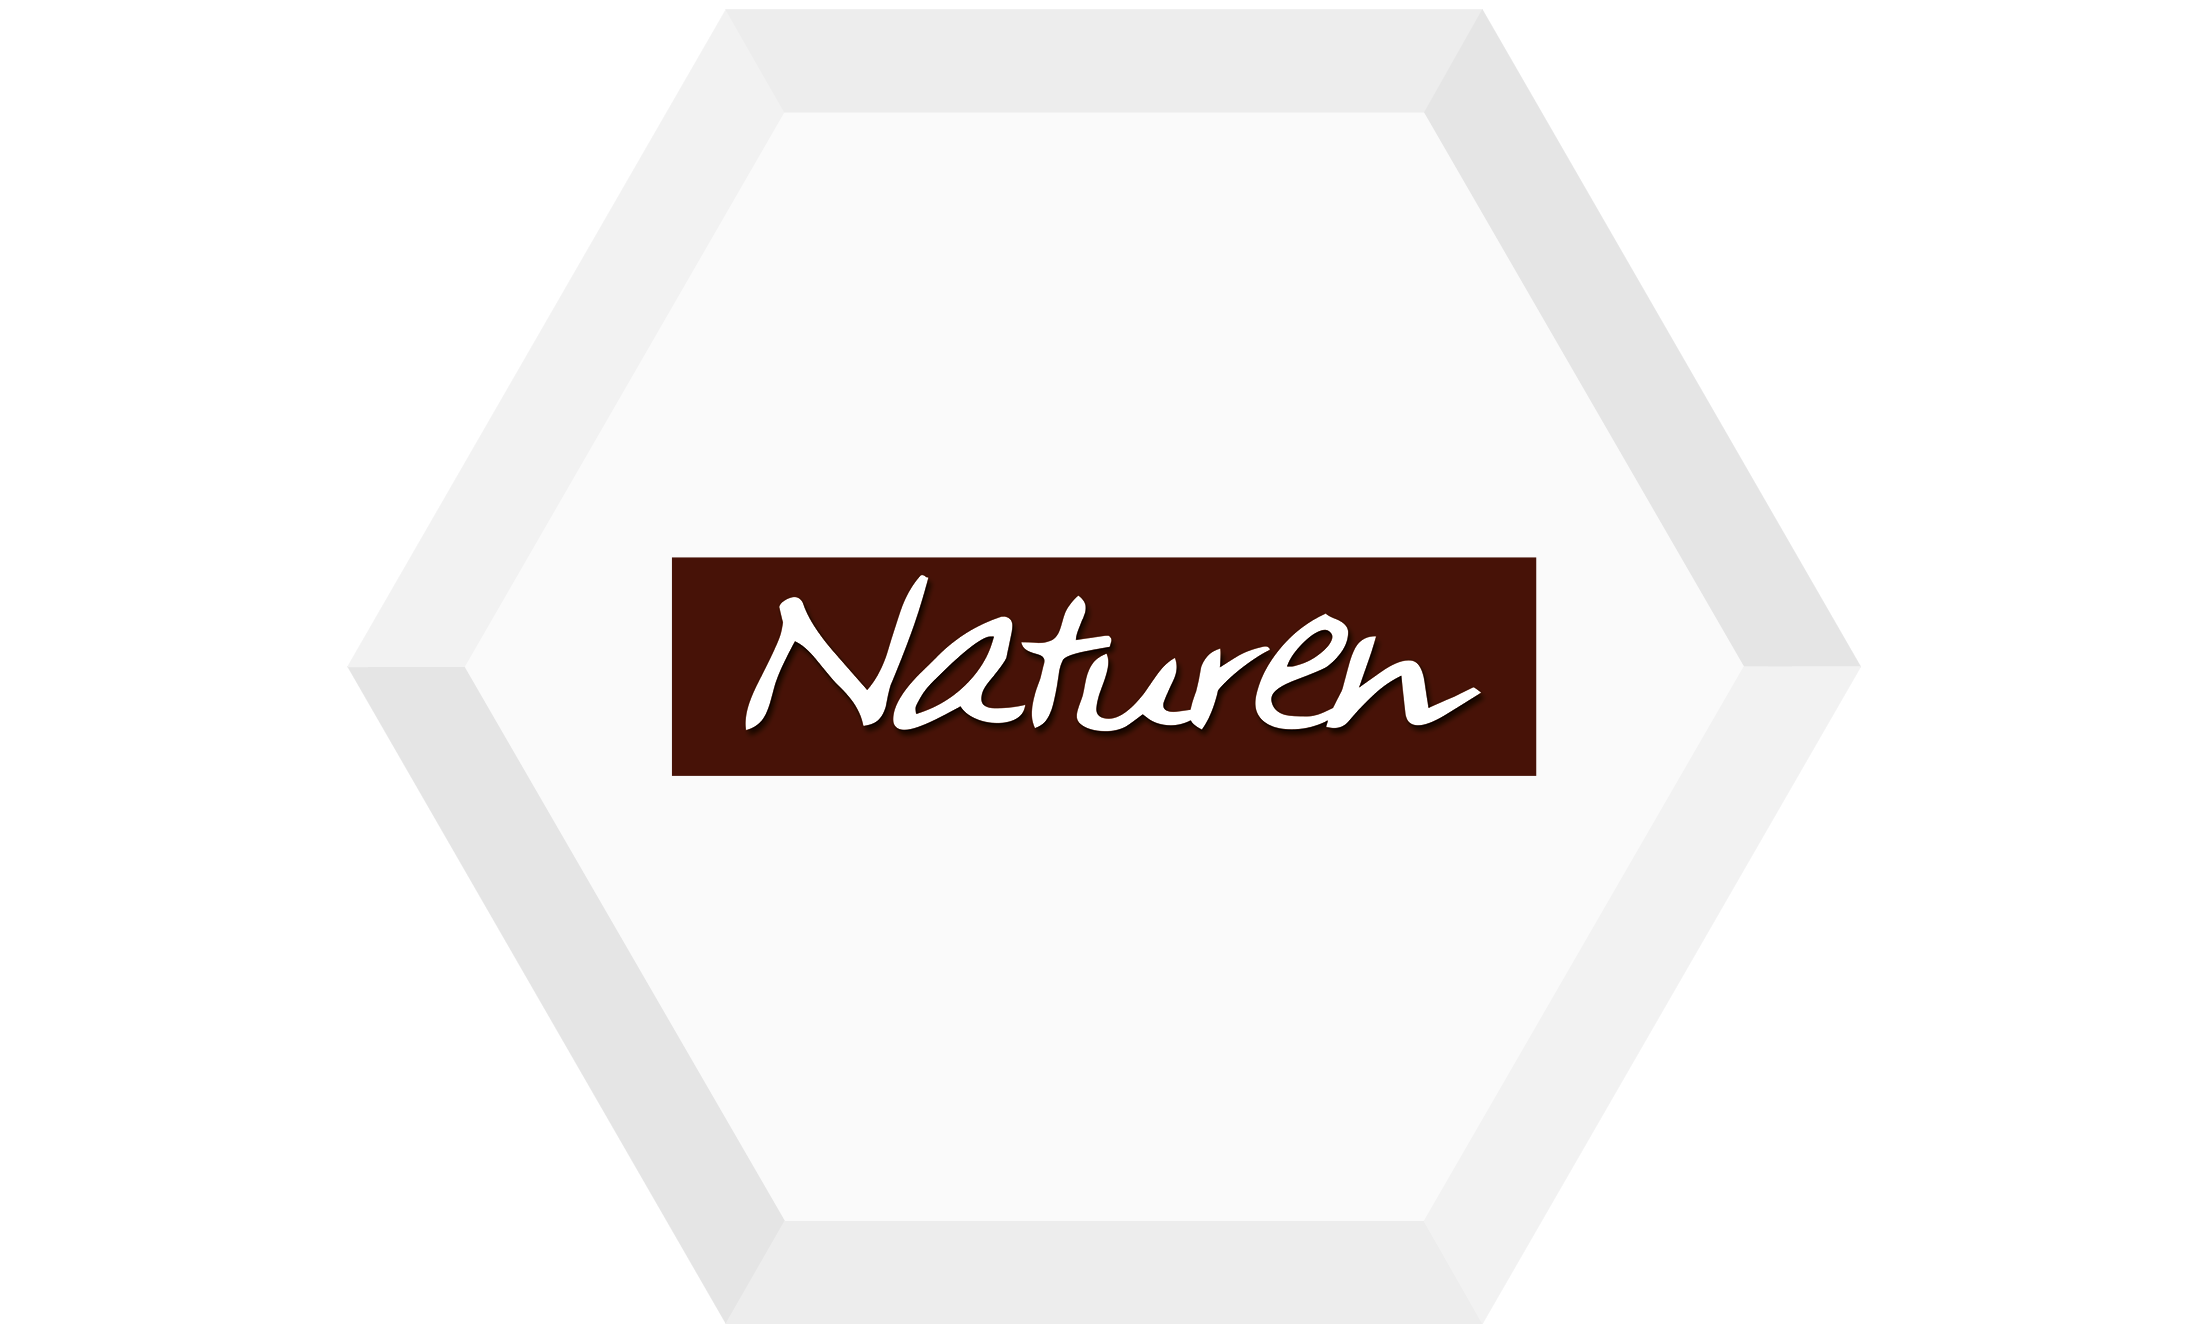 Naturen